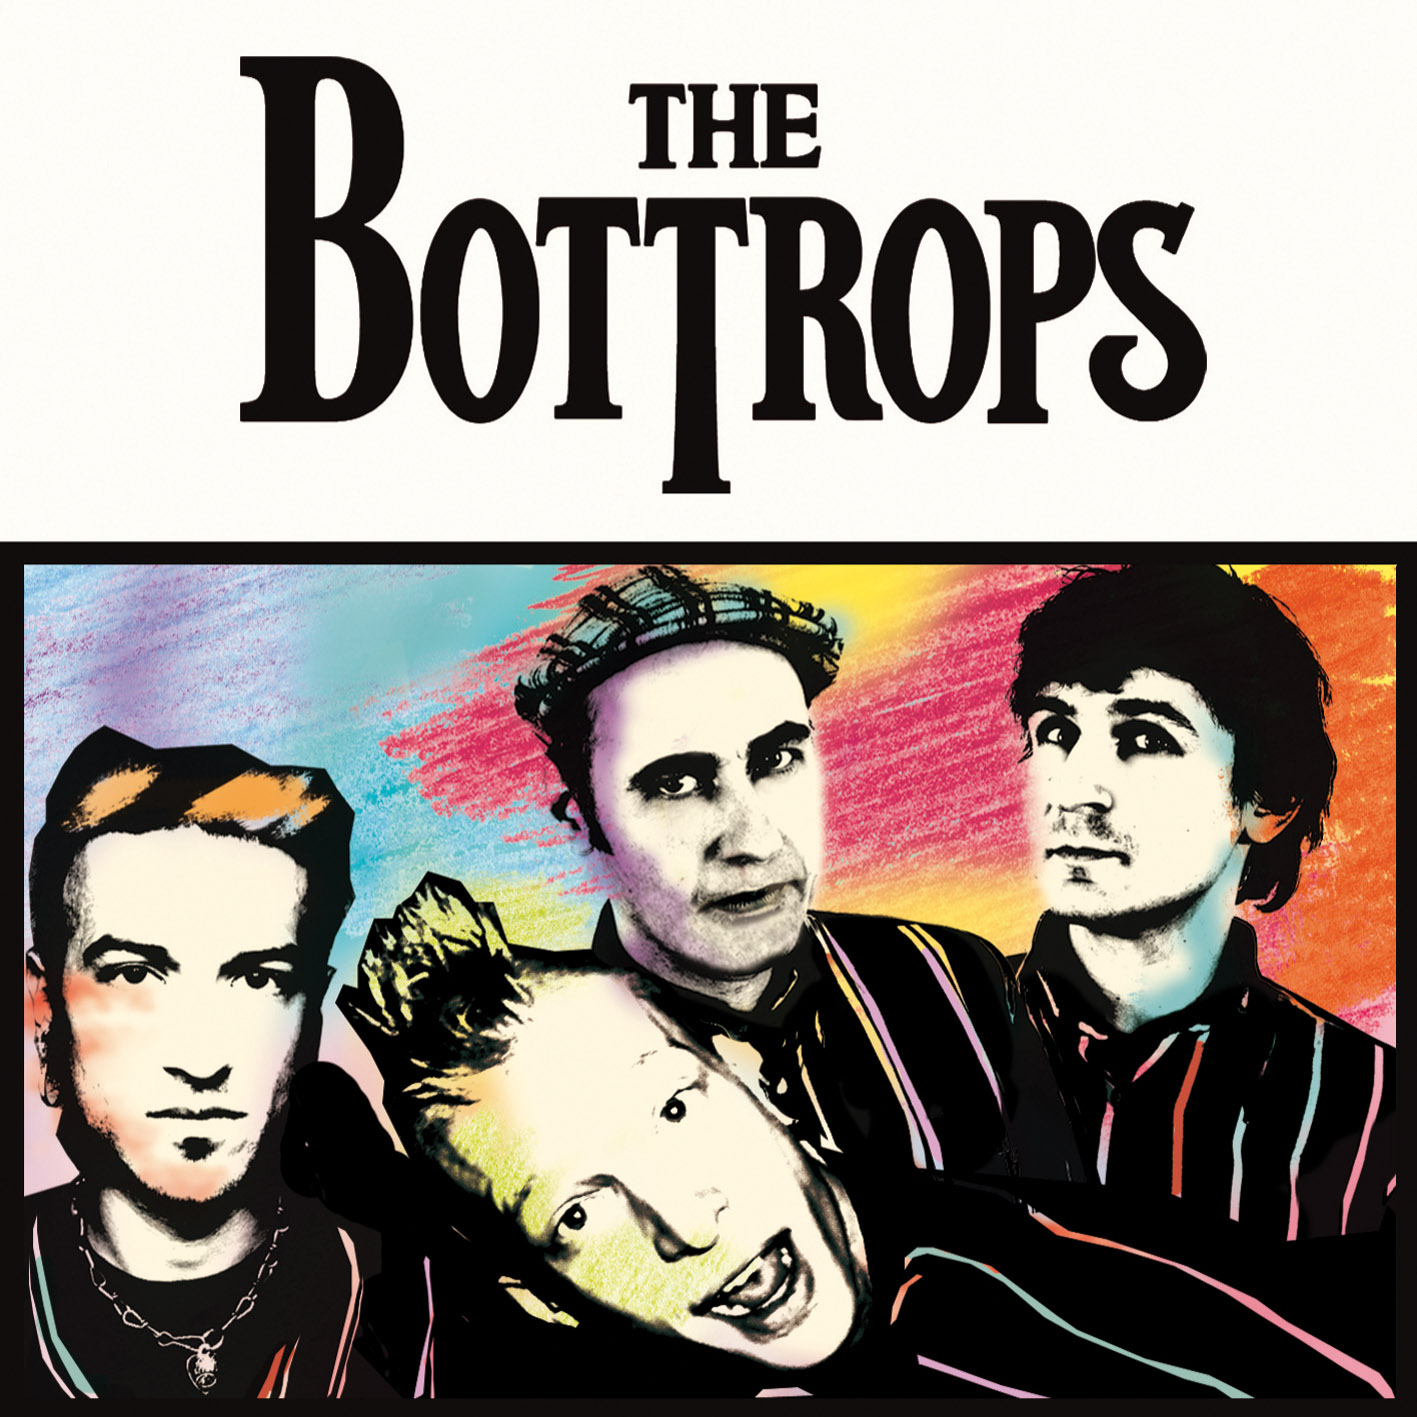 The Bottrops - The Bottrops